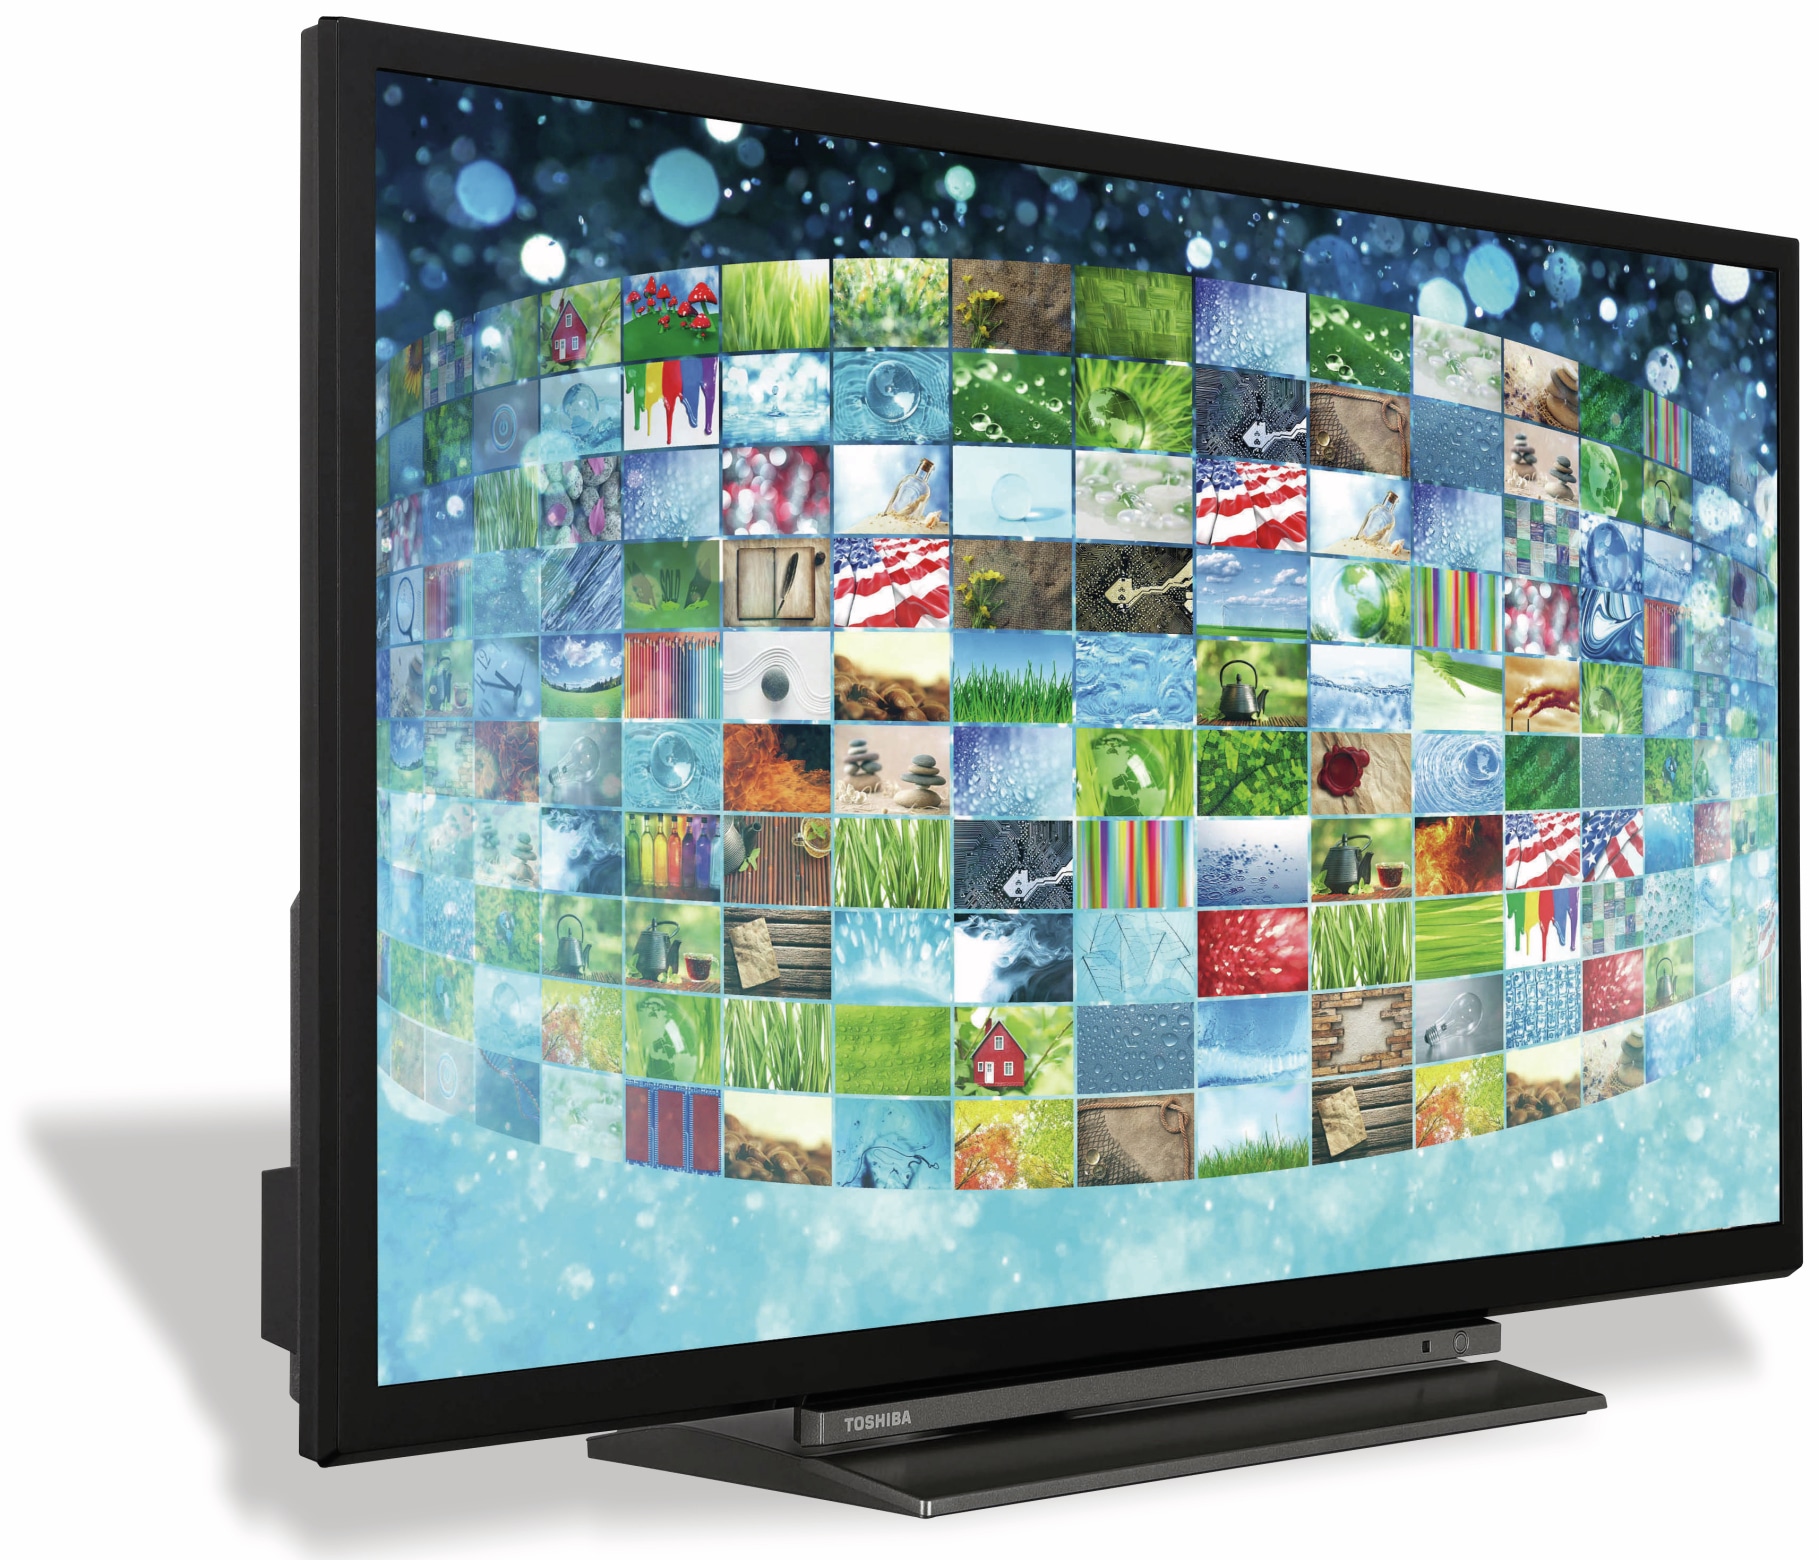 Toshiba LED-TV WD3A63DA, EEK: A+, 80 cm (32"), schwarz, mit DVD Player